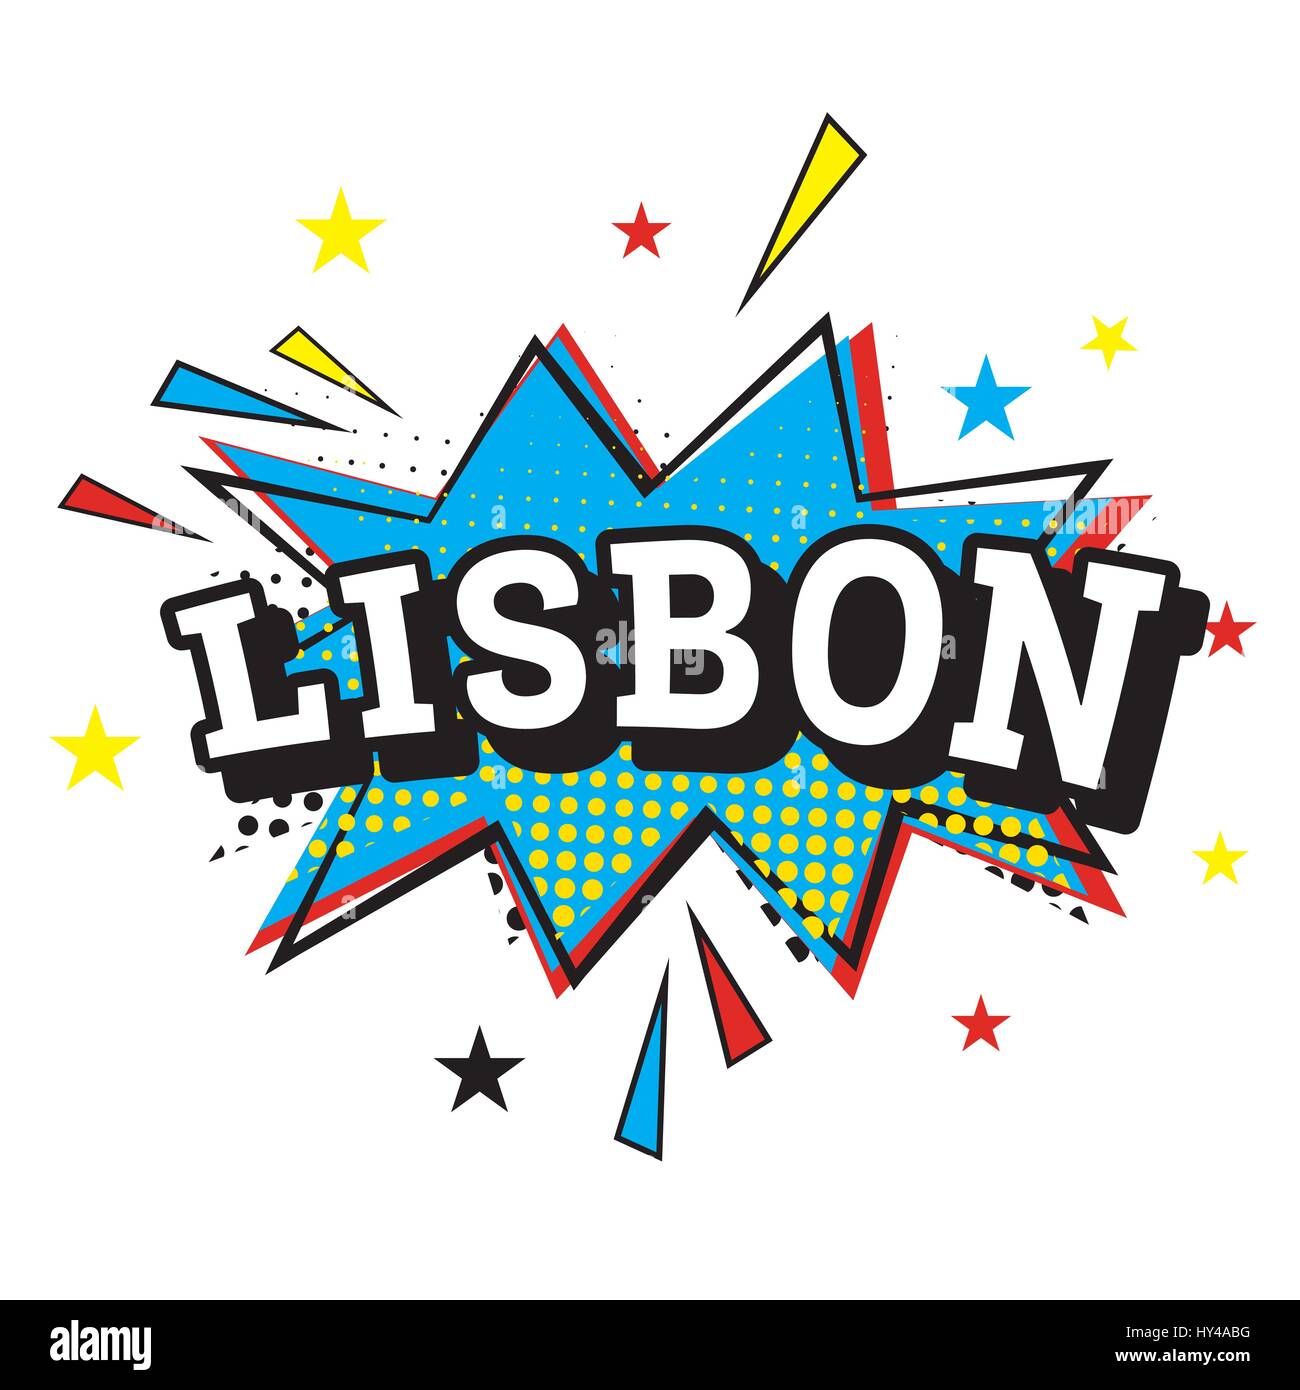 Lisbon. Comic Text in Pop Art Style. Vector Illustration Stock Vector